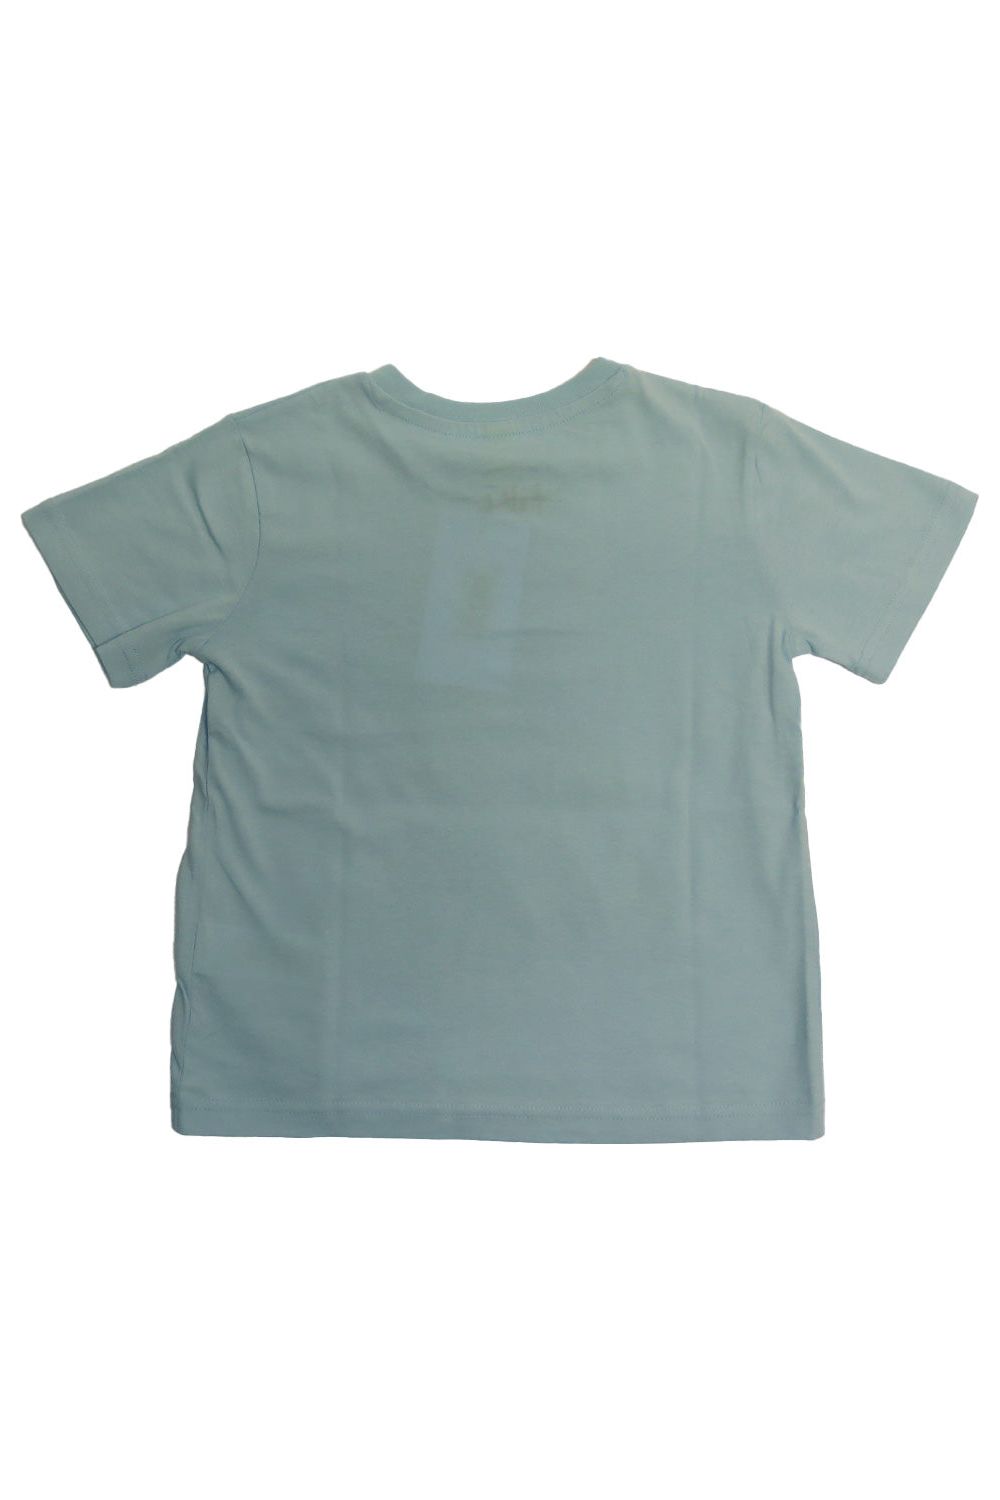 Tiki Man Youth Short Sleeve T-Shirt Bright Blue